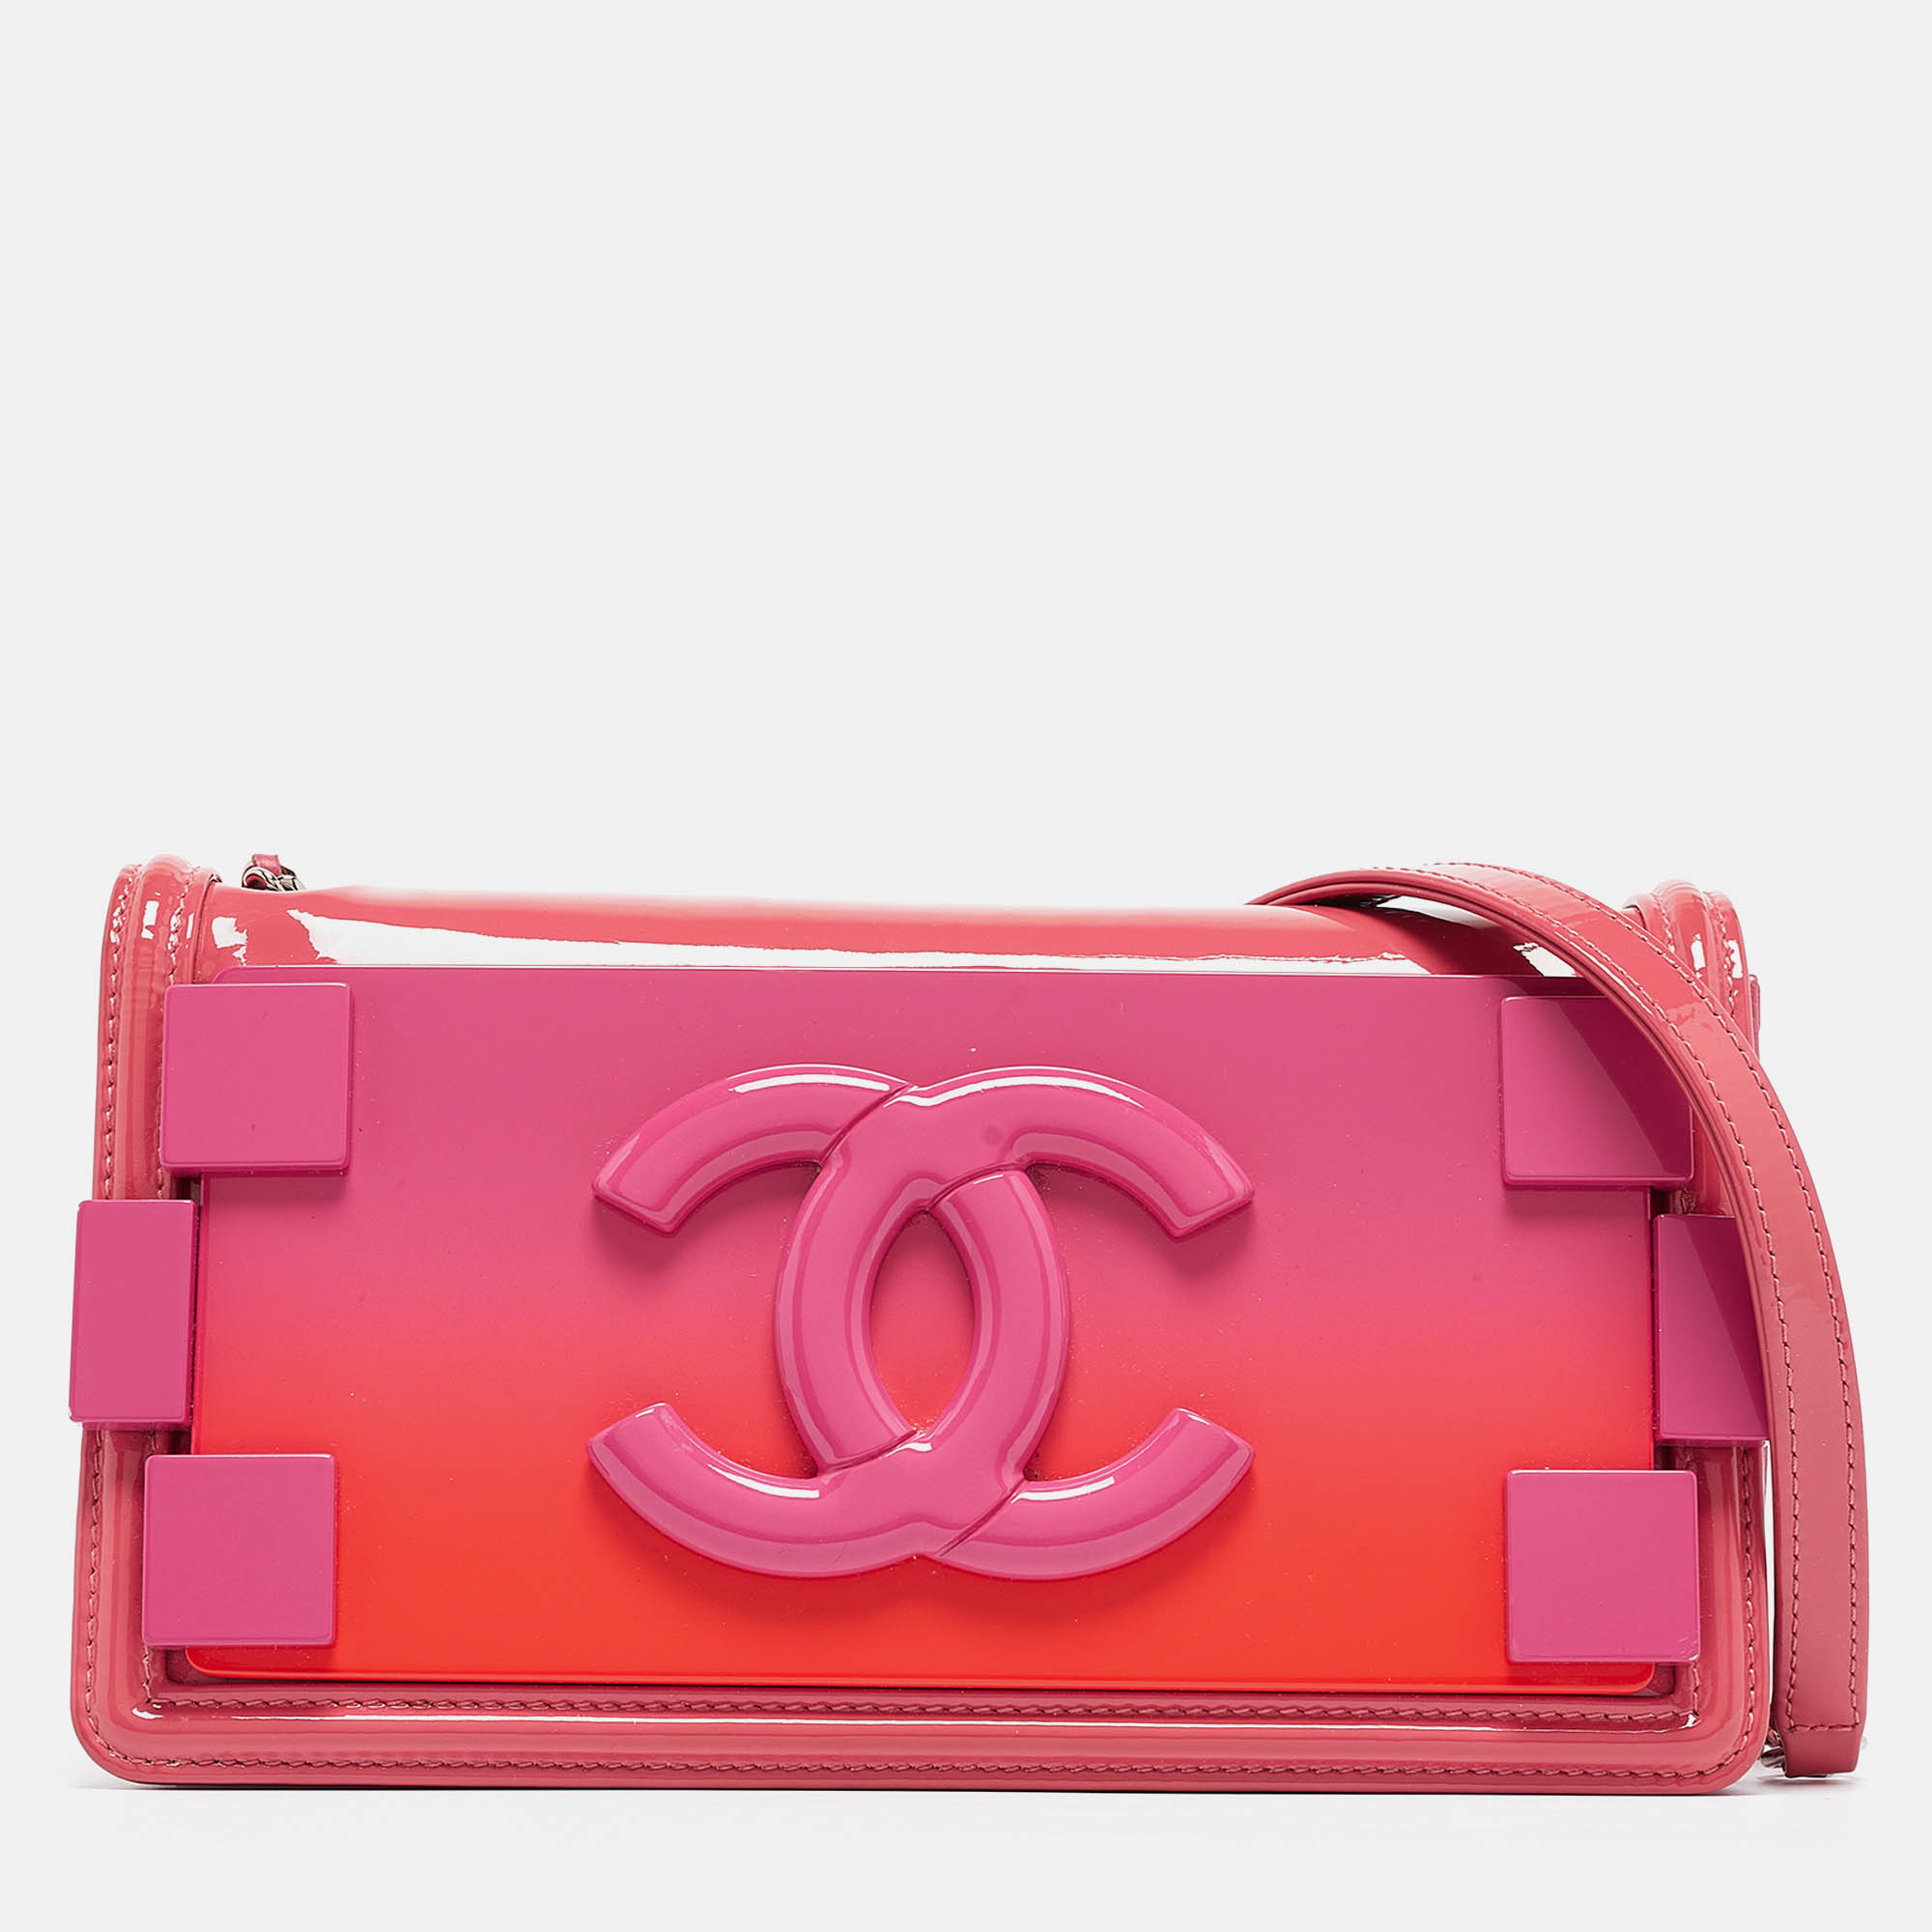 Chanel pink/orange plexiglass and patent leather small boy brick flap bag